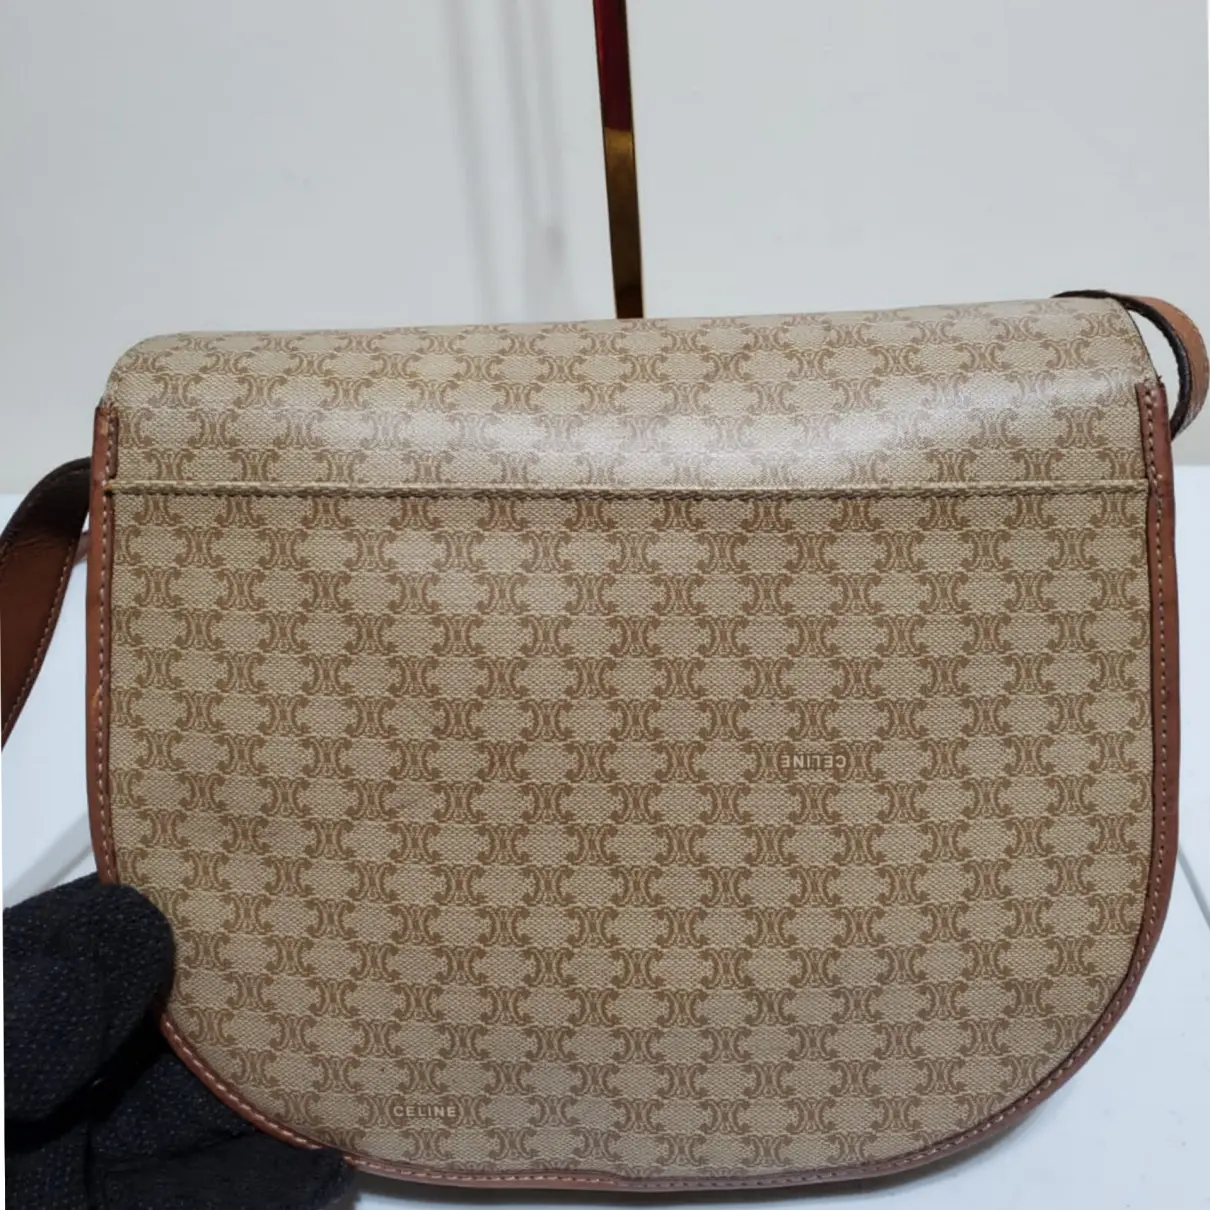 Buy Celine Crécy leather crossbody bag online - Vintage